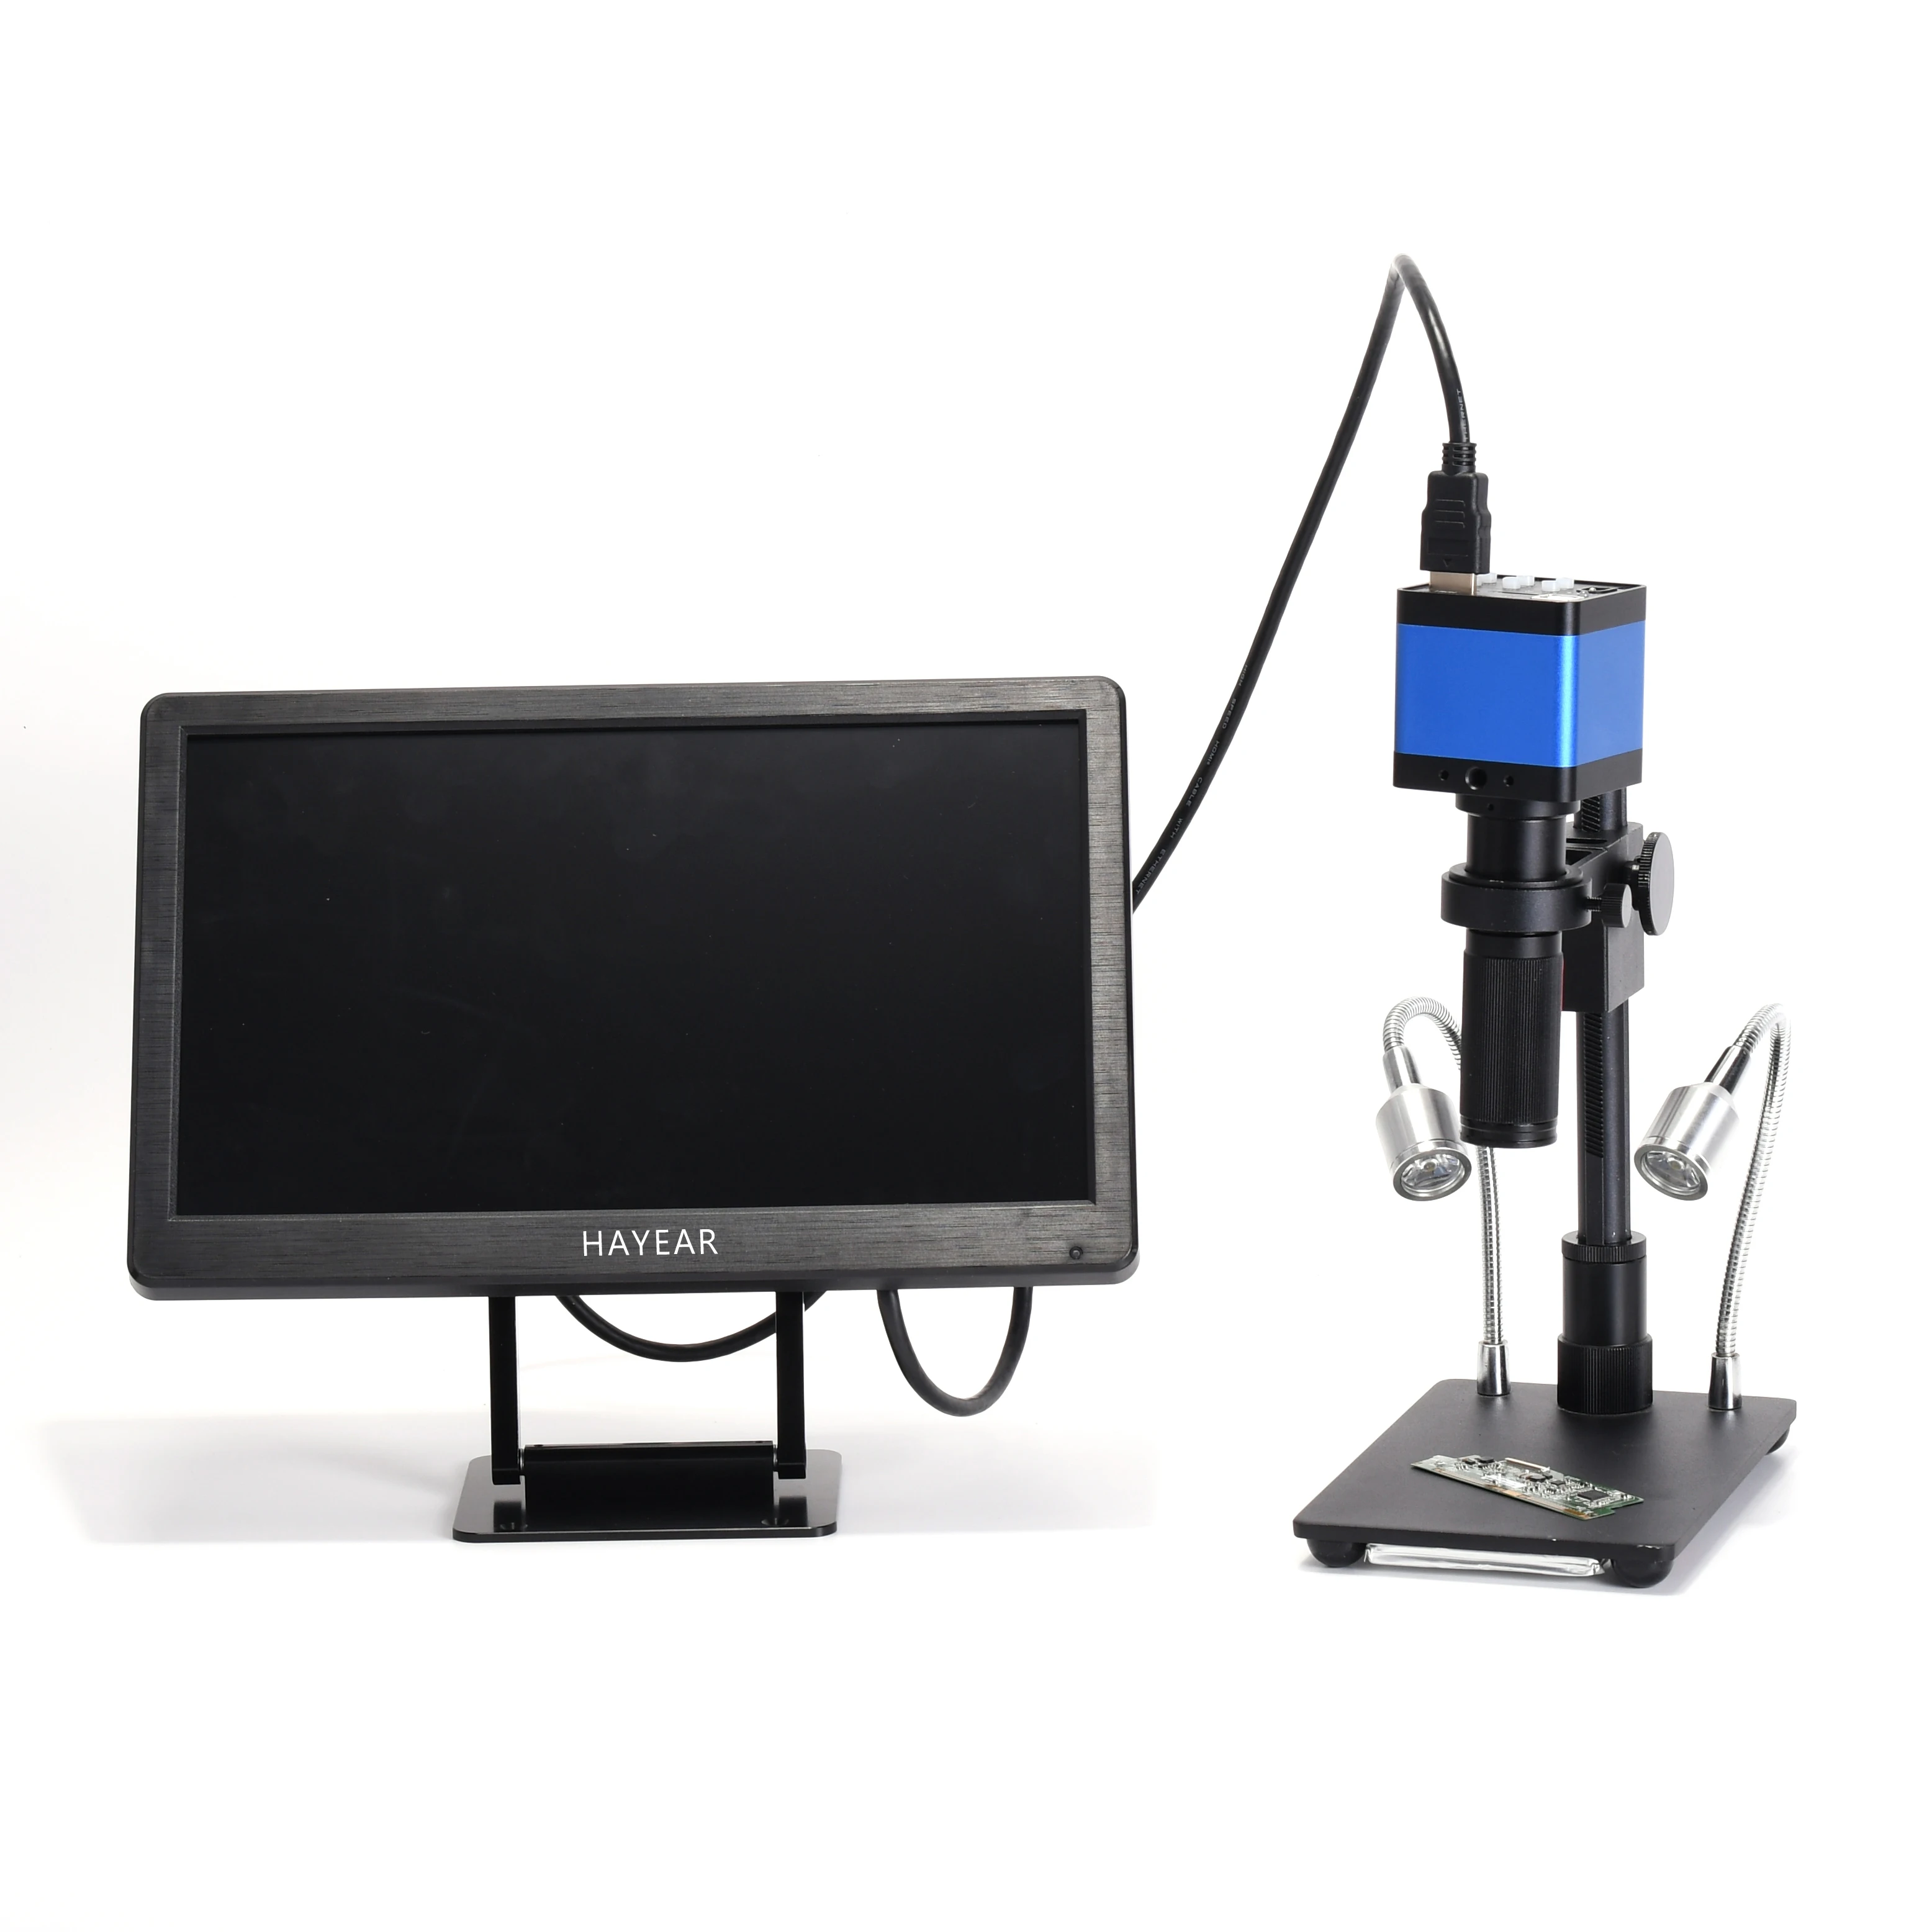 

Hayear 16MP Microscope Camera Kit 11.6 inches Screen LCD Monitor 1080P Full HD IPS Display HDMI VGA TFT for Soldering PCB Repair